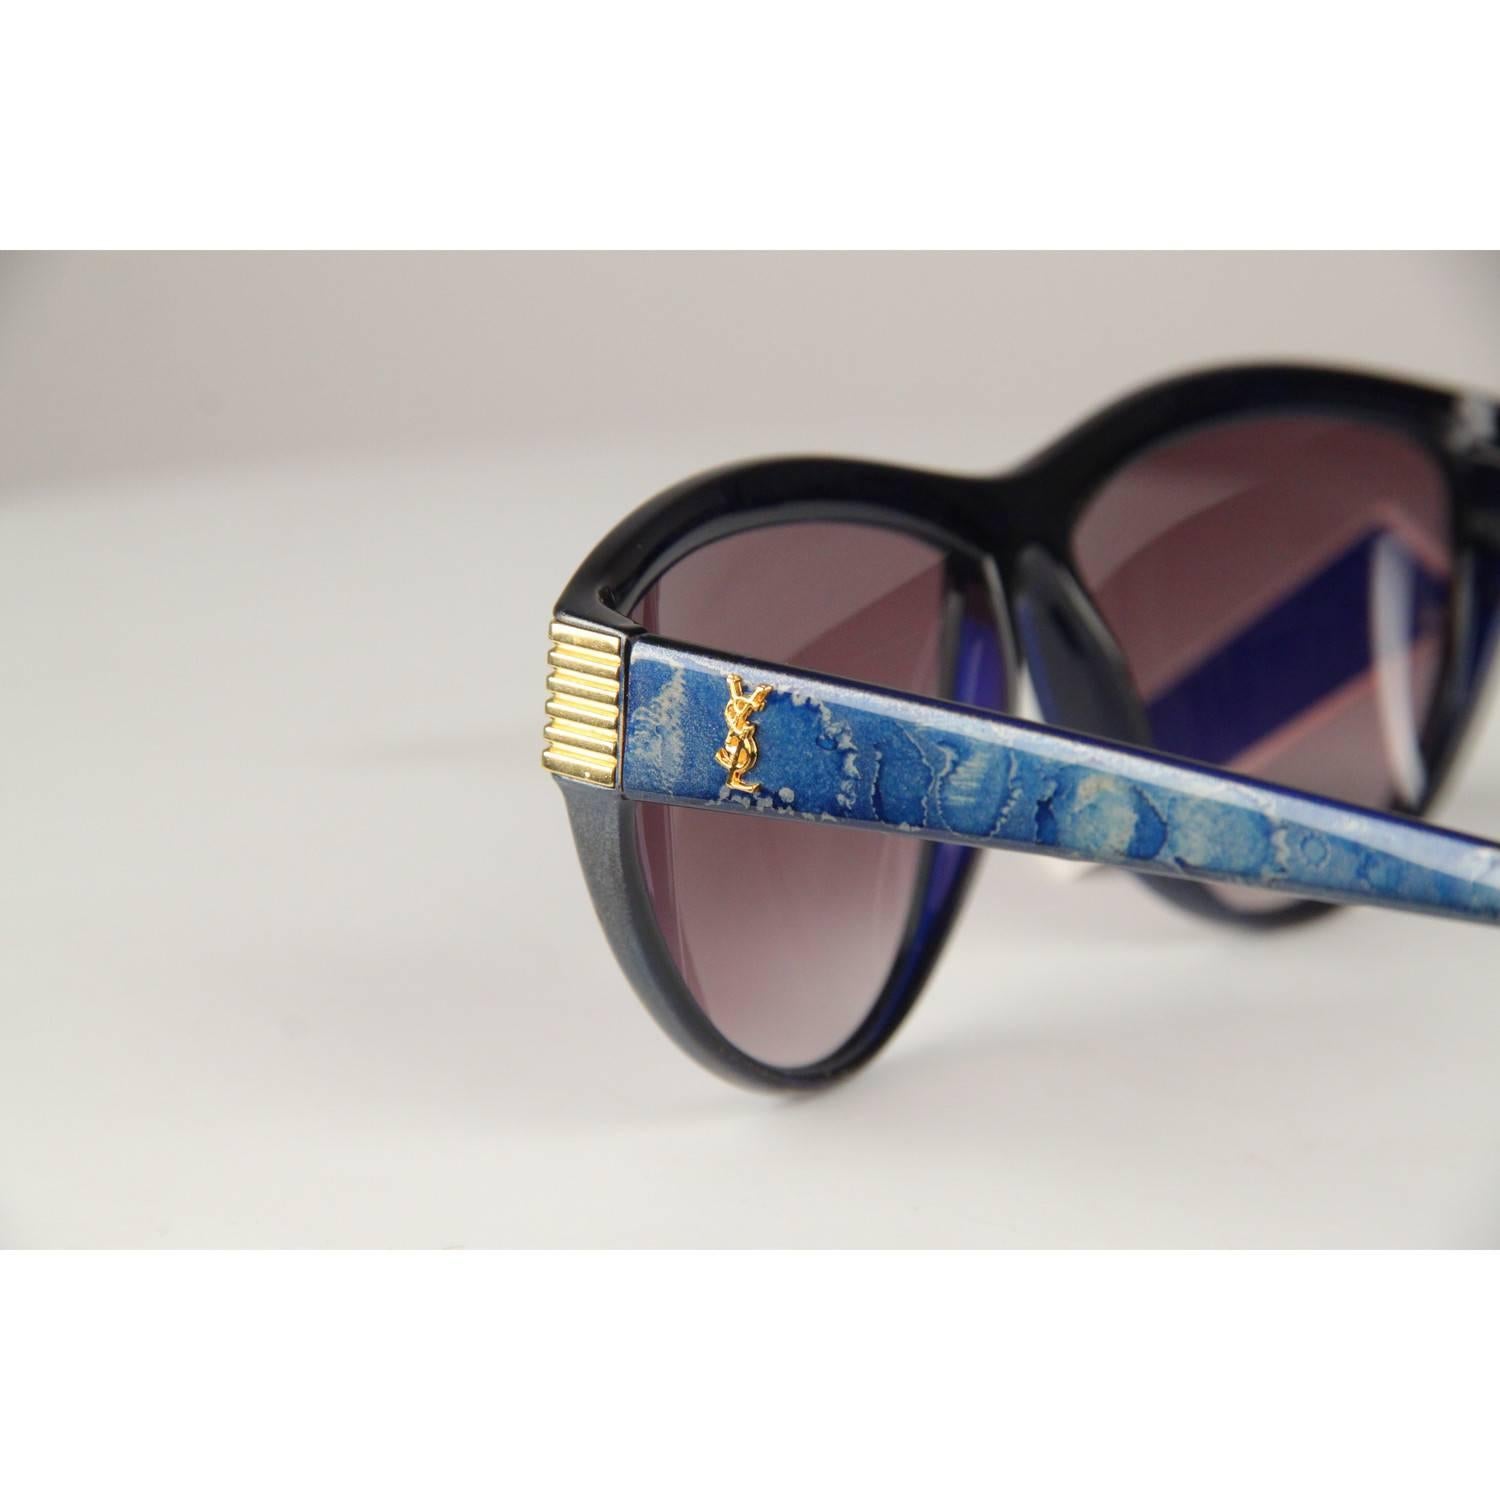 Women's Yves Saint Laurent Vintage Blue Marbled Sunglasses 9045 56mm New Old Stock